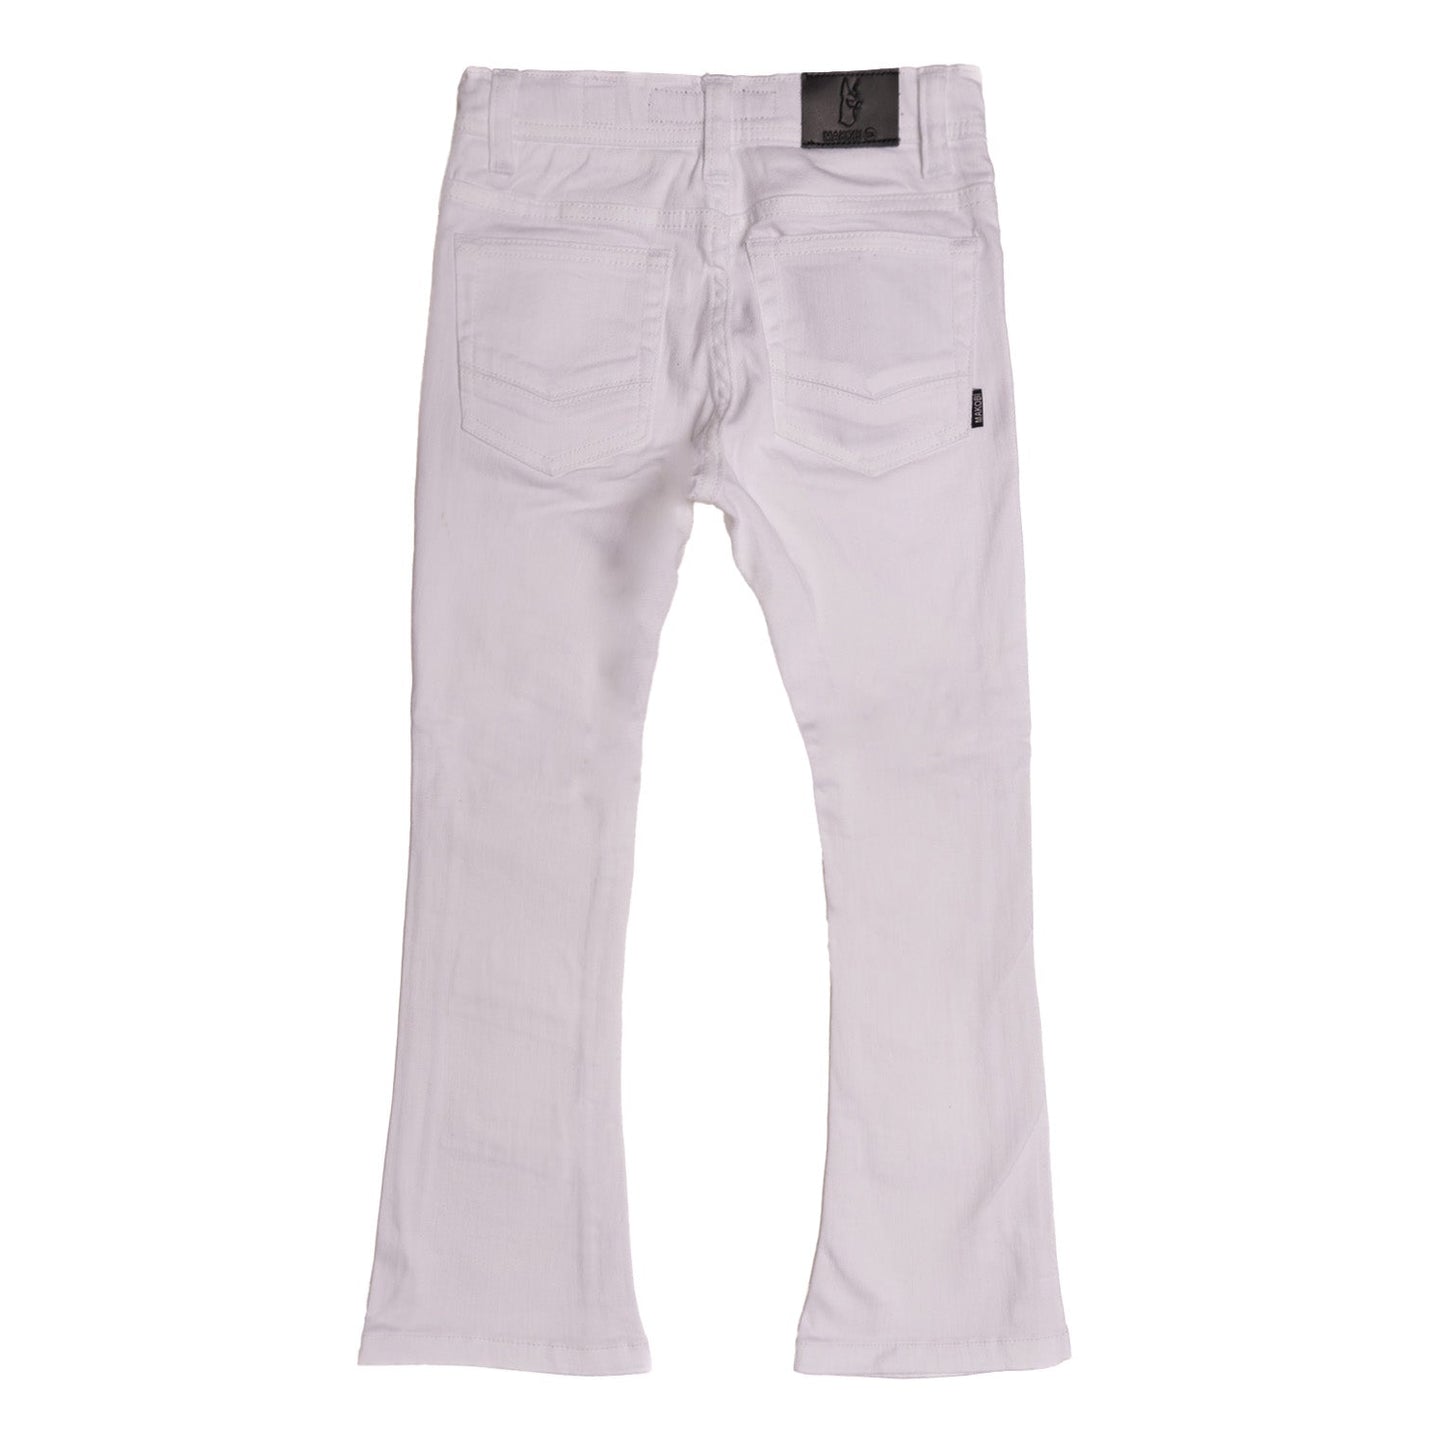 B1903 Makobi Montego Kids Jeans with Underlay - White